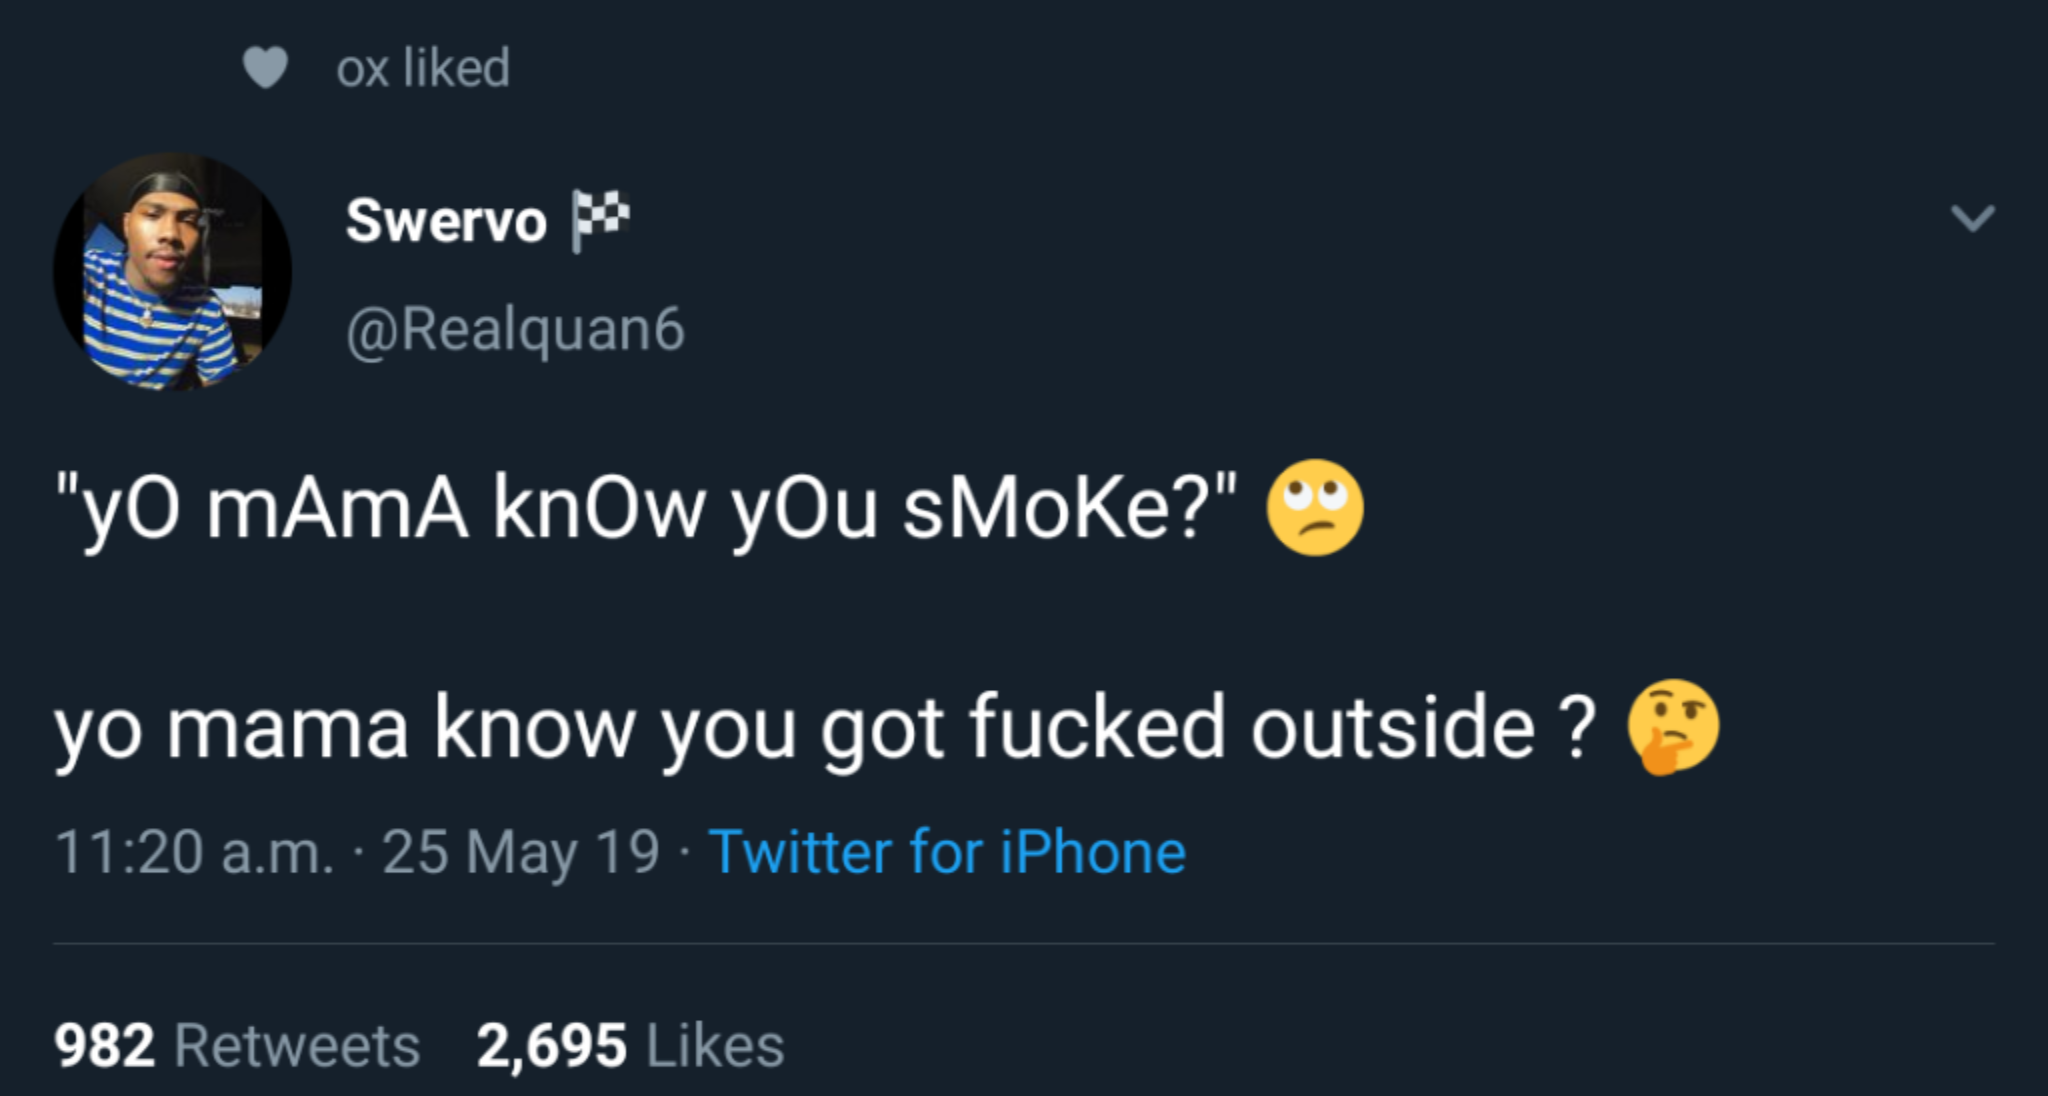 black twitter - lyrics - ox d Swervo X "Yo mAmA know you smoke?" yo mama know you got fucked outside ? a.m. . 25 May 19. Twitter for iPhone 982 2,695